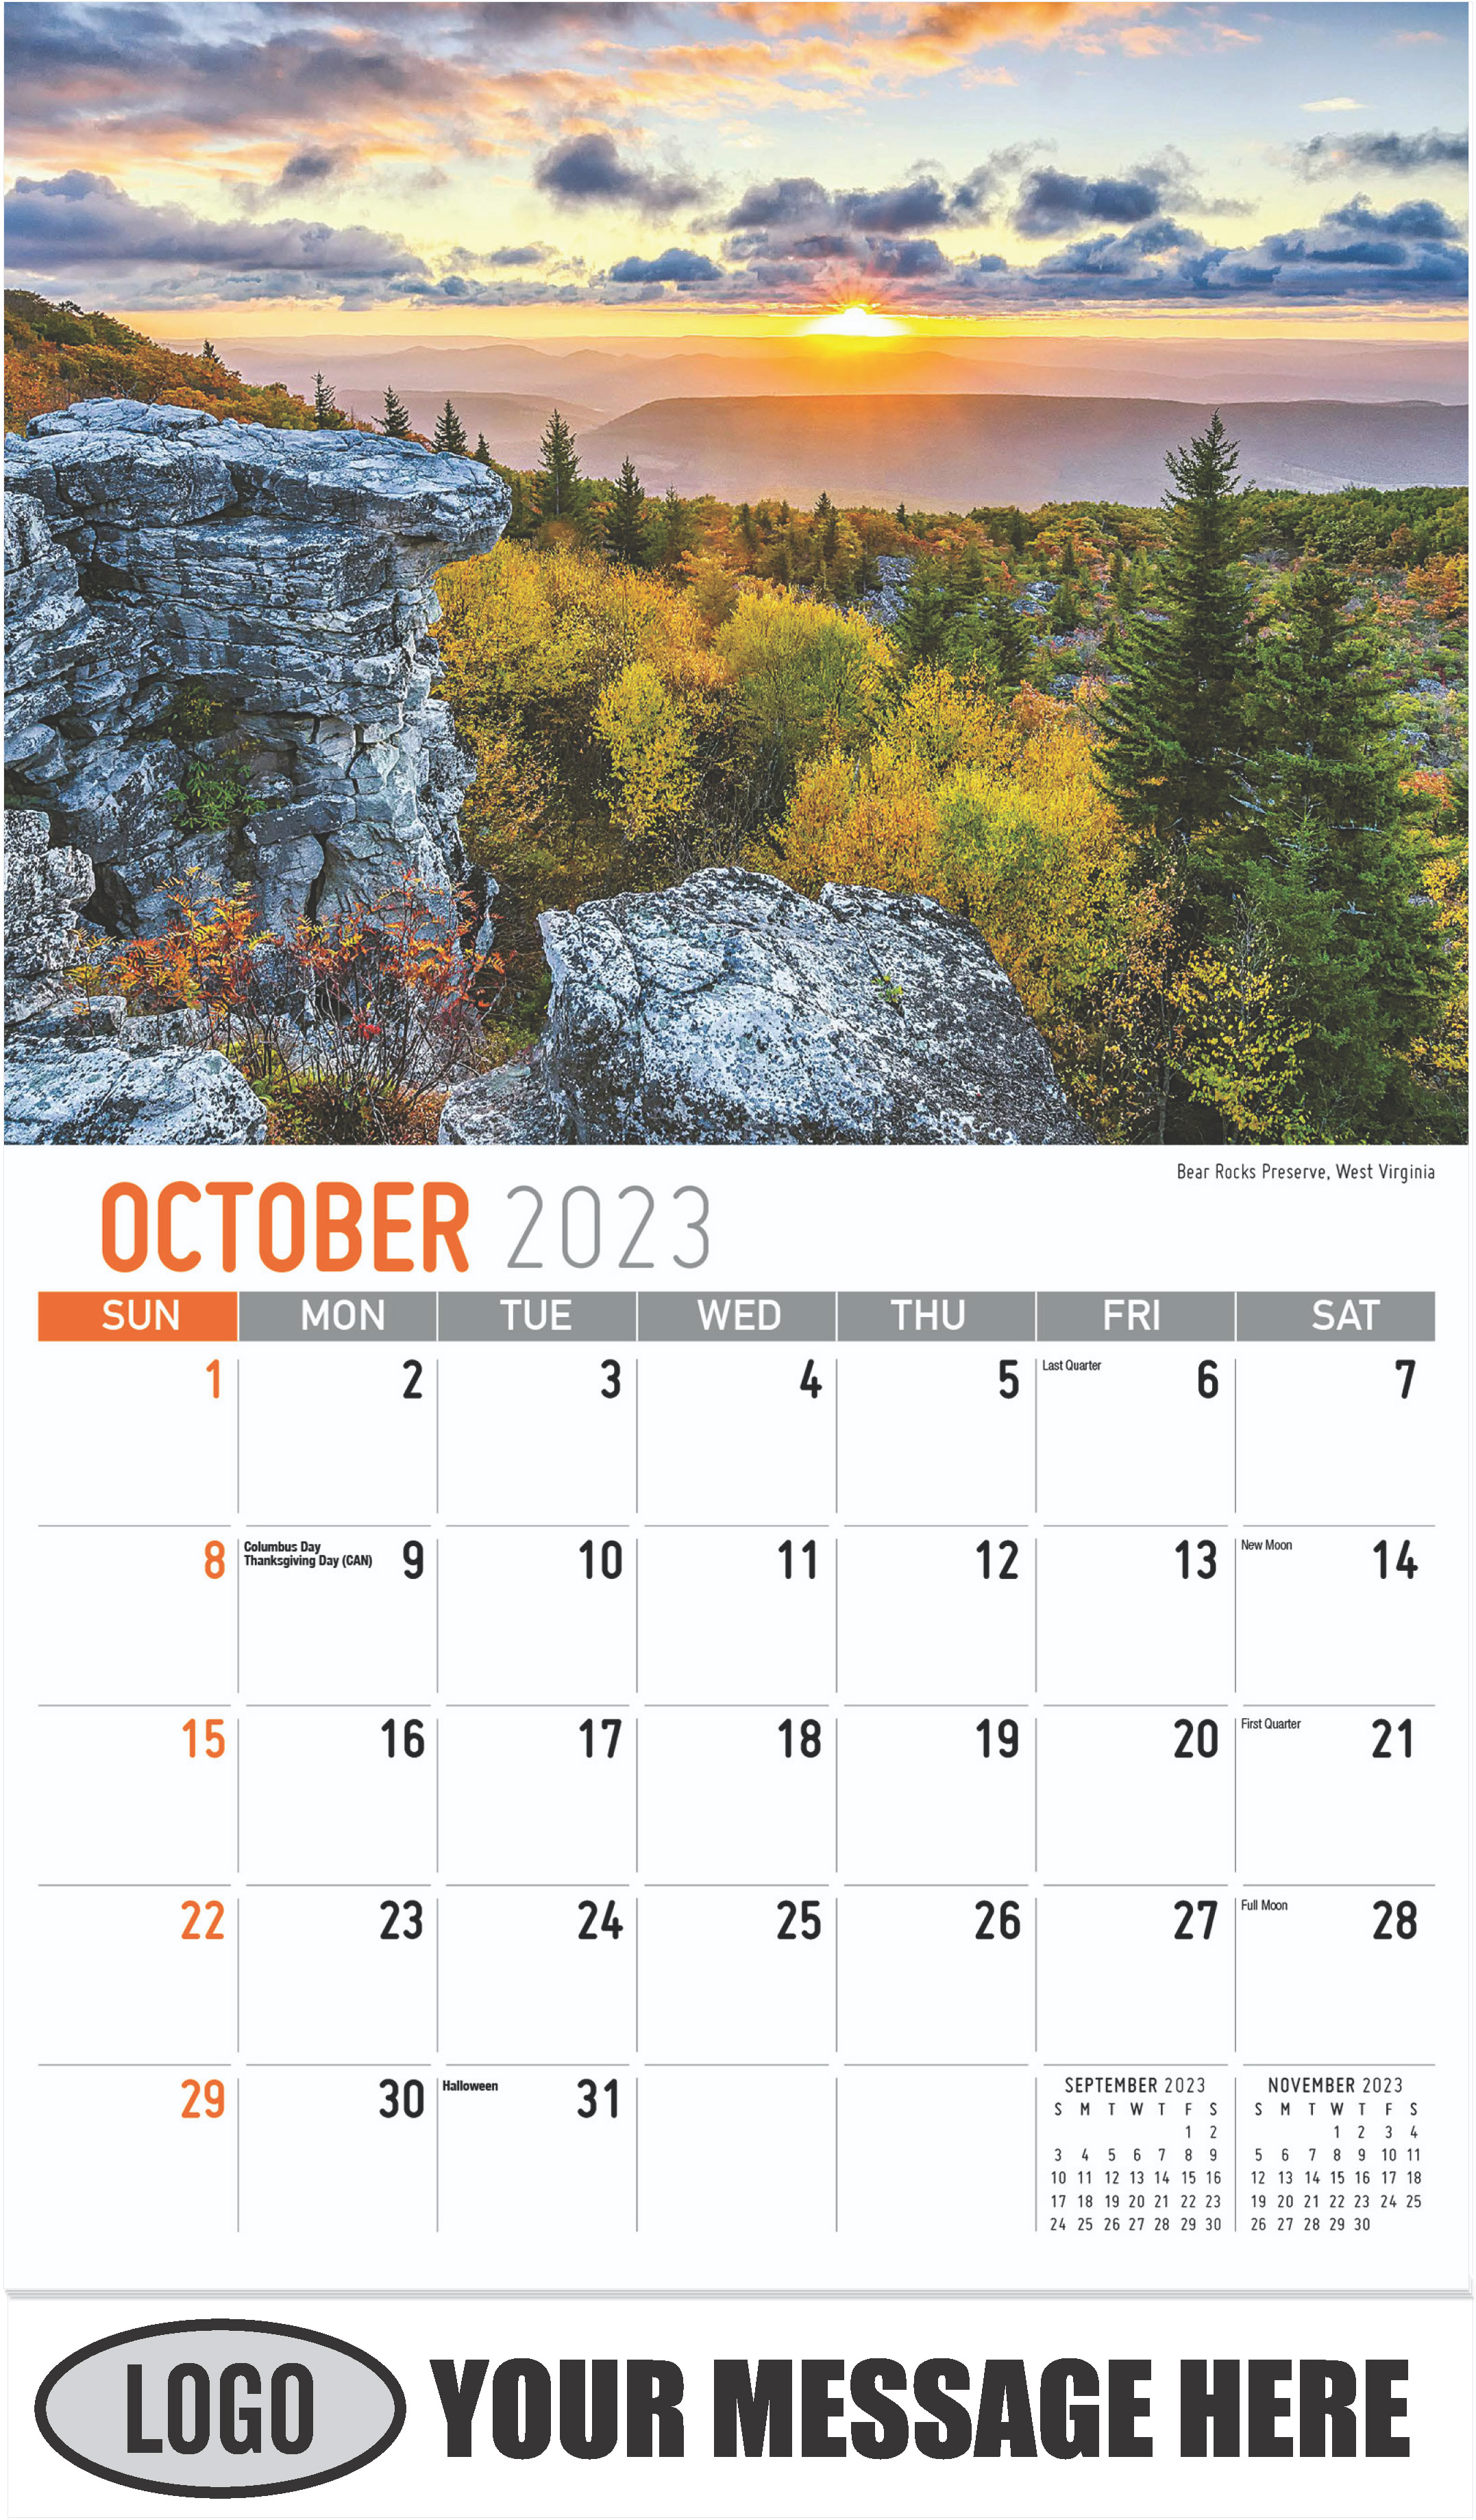 Bear Rocks Preserve, West Virginia - October - Scenes of Southeast USA 2023 Promotional Calendar